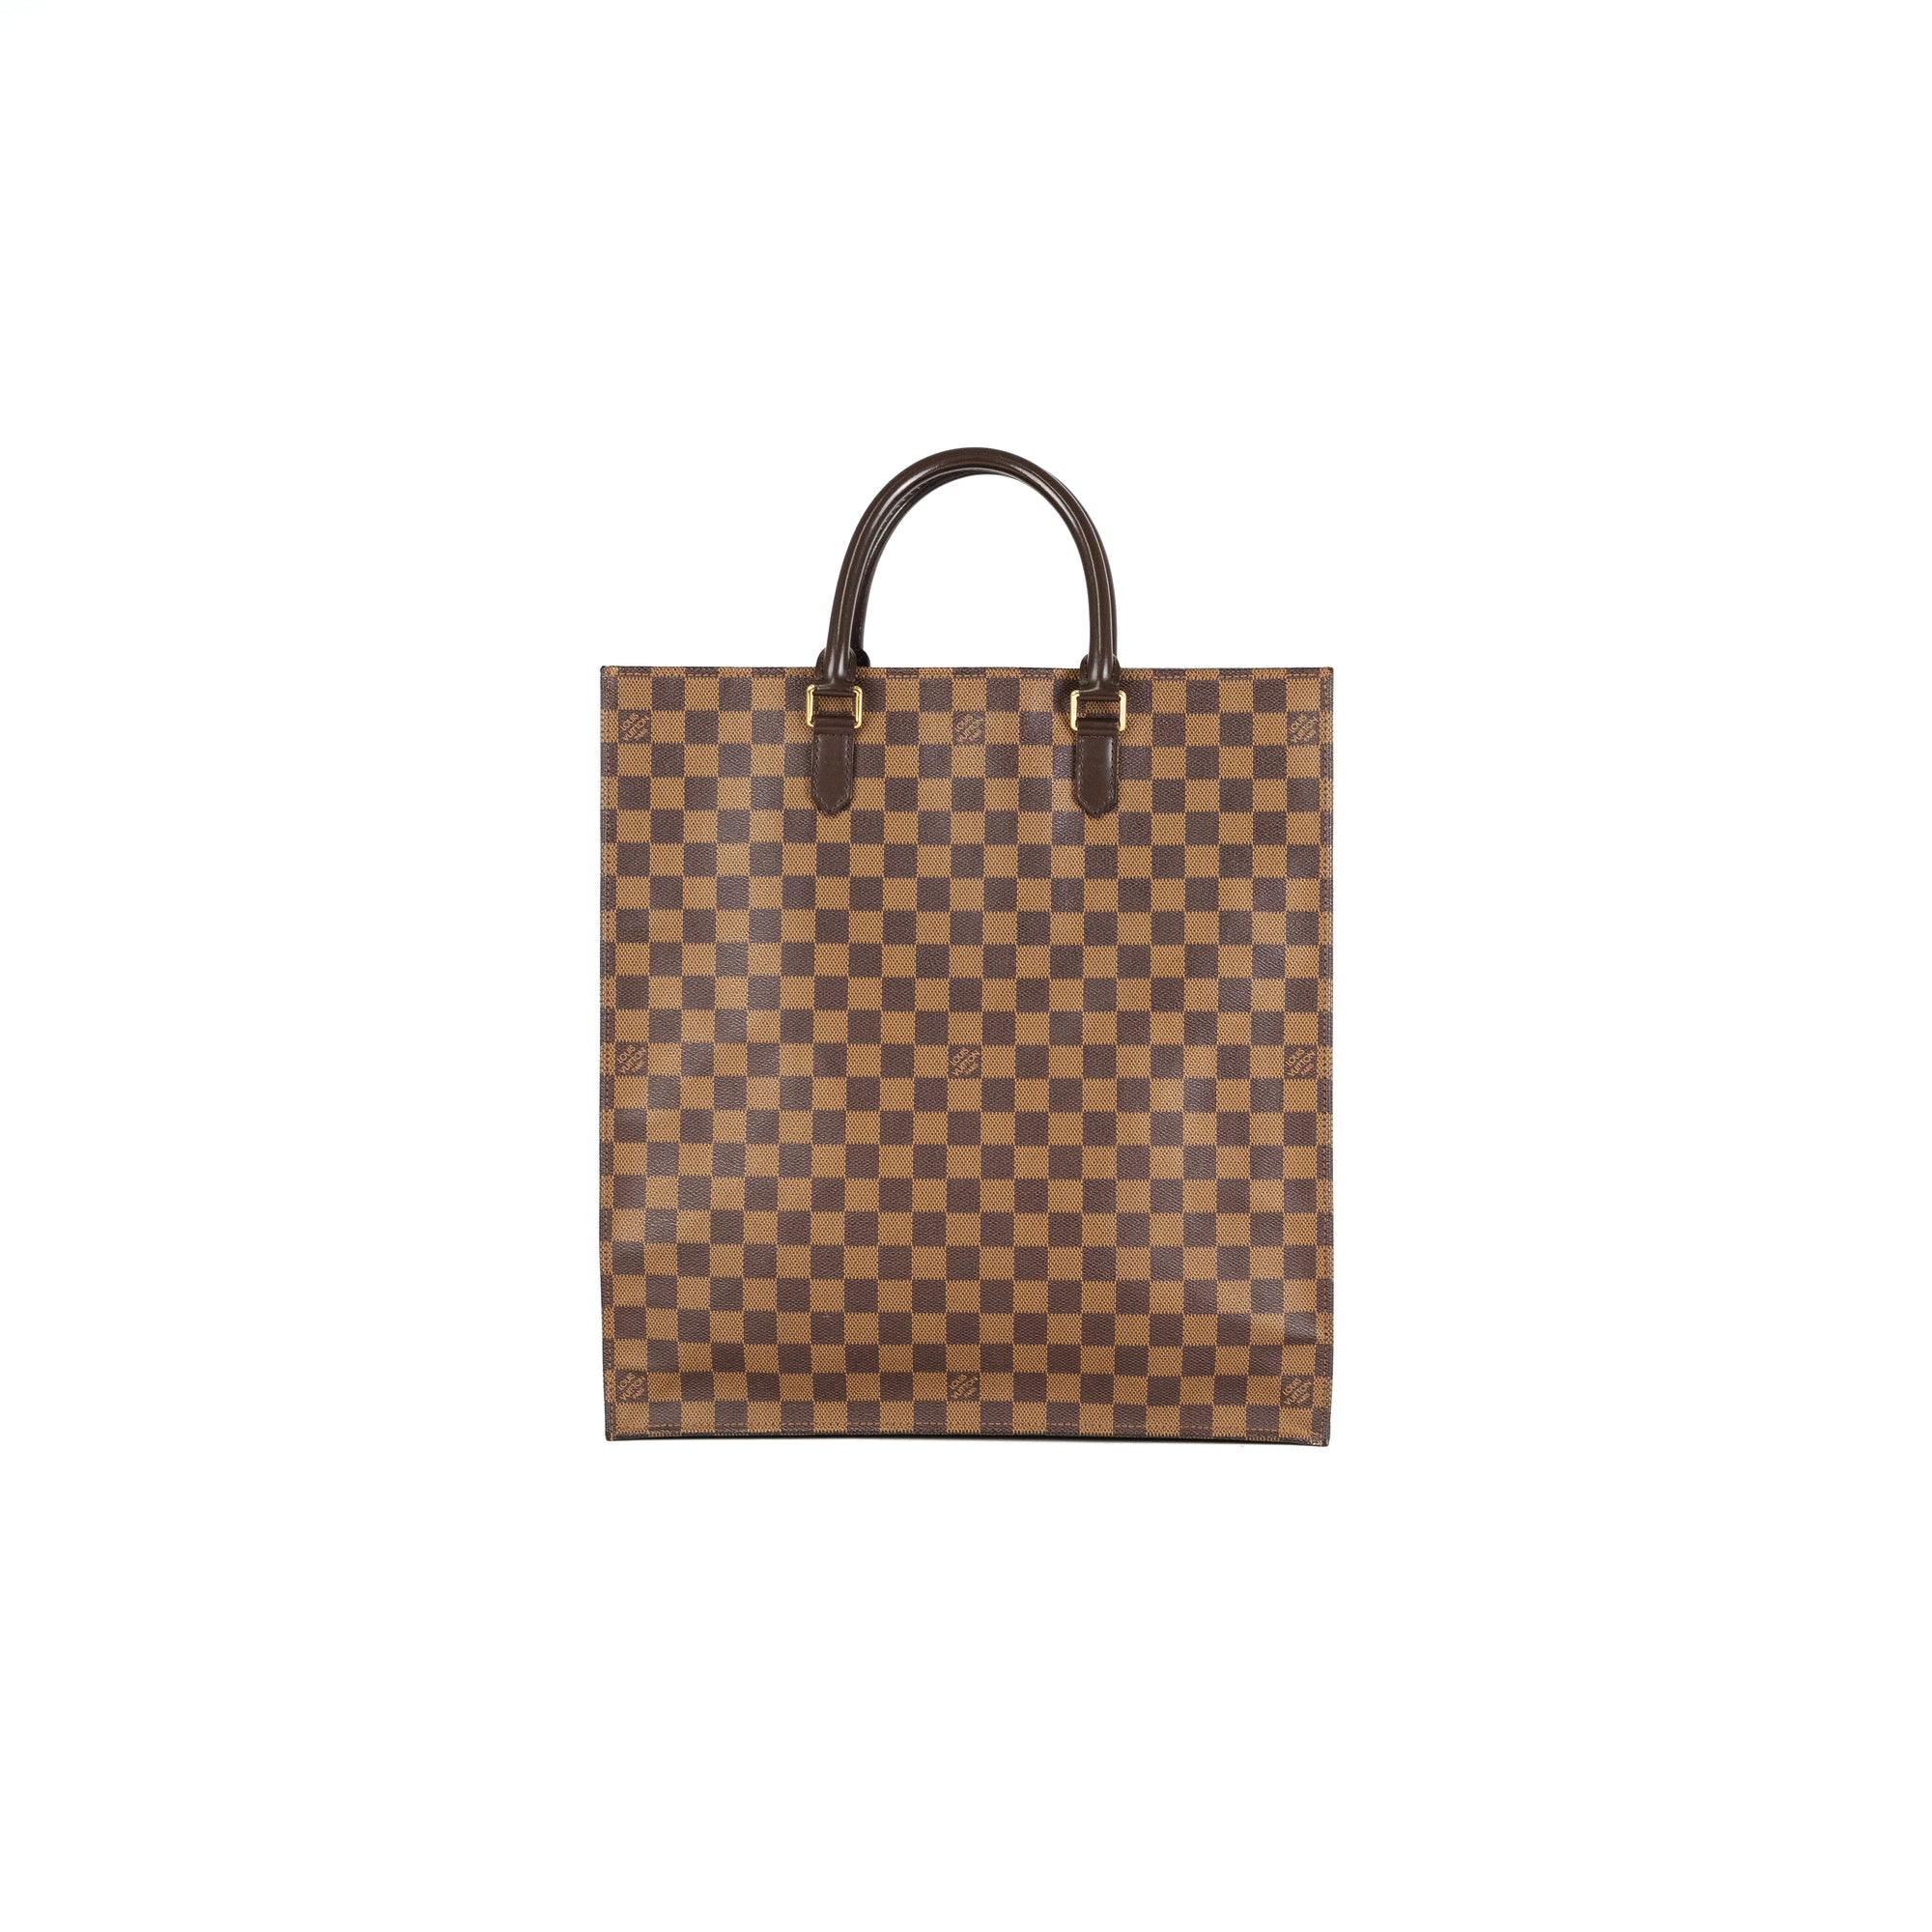 LOUIS VUITTON Damier Ebene Sac Shopping Limited Tote Bag